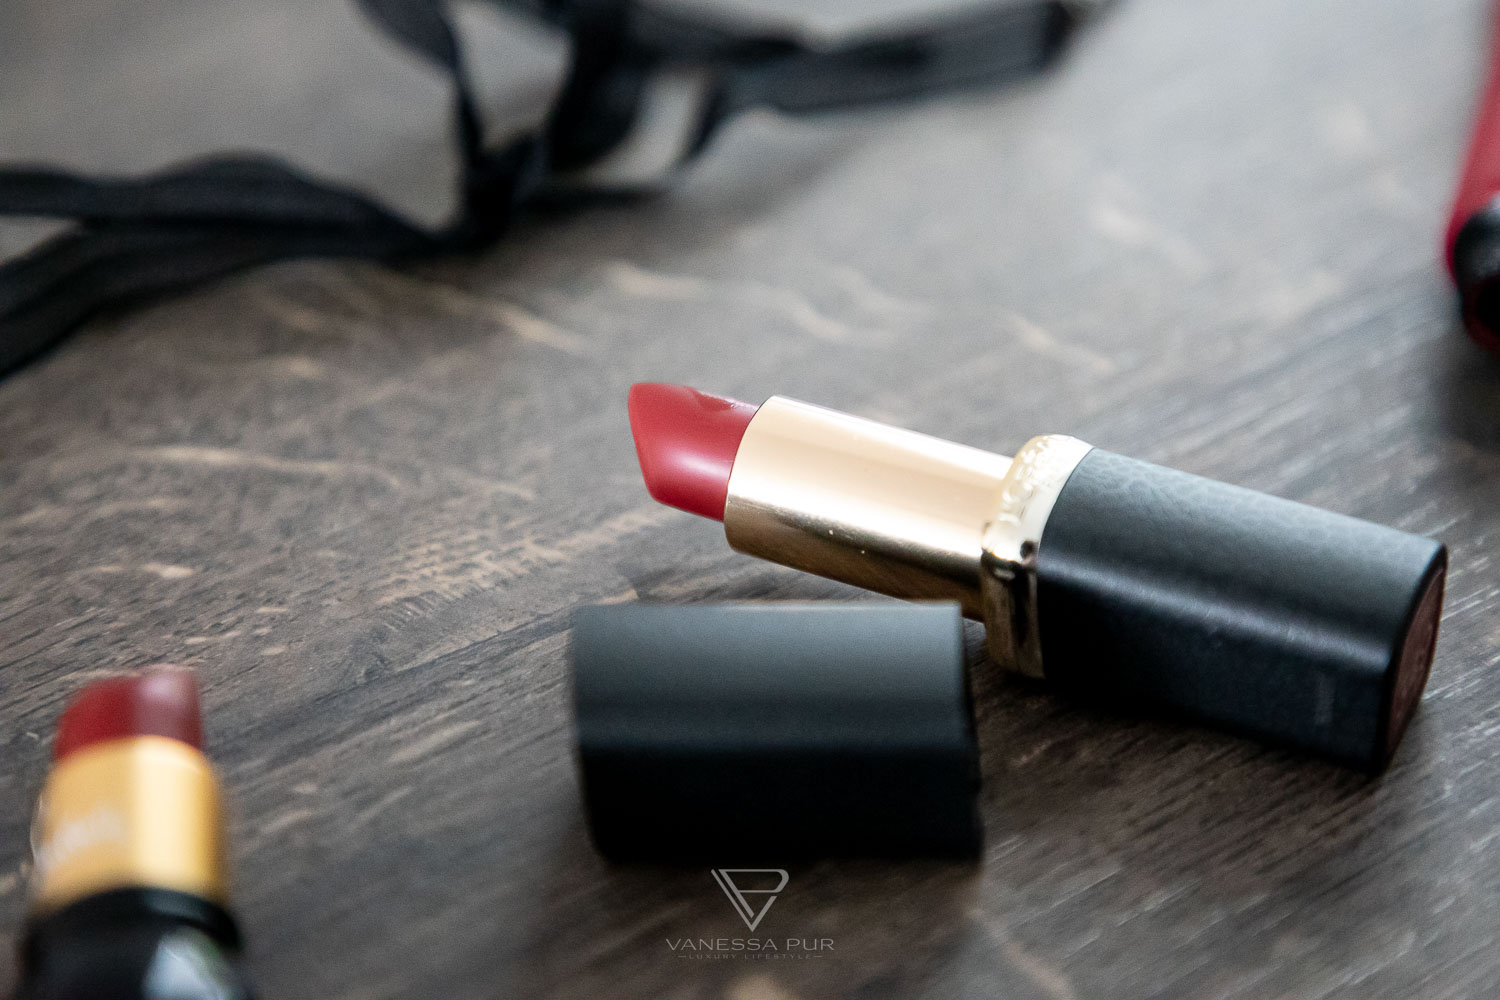 Rote, matte Lippenstifte - beste matte Farben für rote Lippen - Top 5 rote Lippenstifte im Test vom MAC, Louboutin bis Chanel